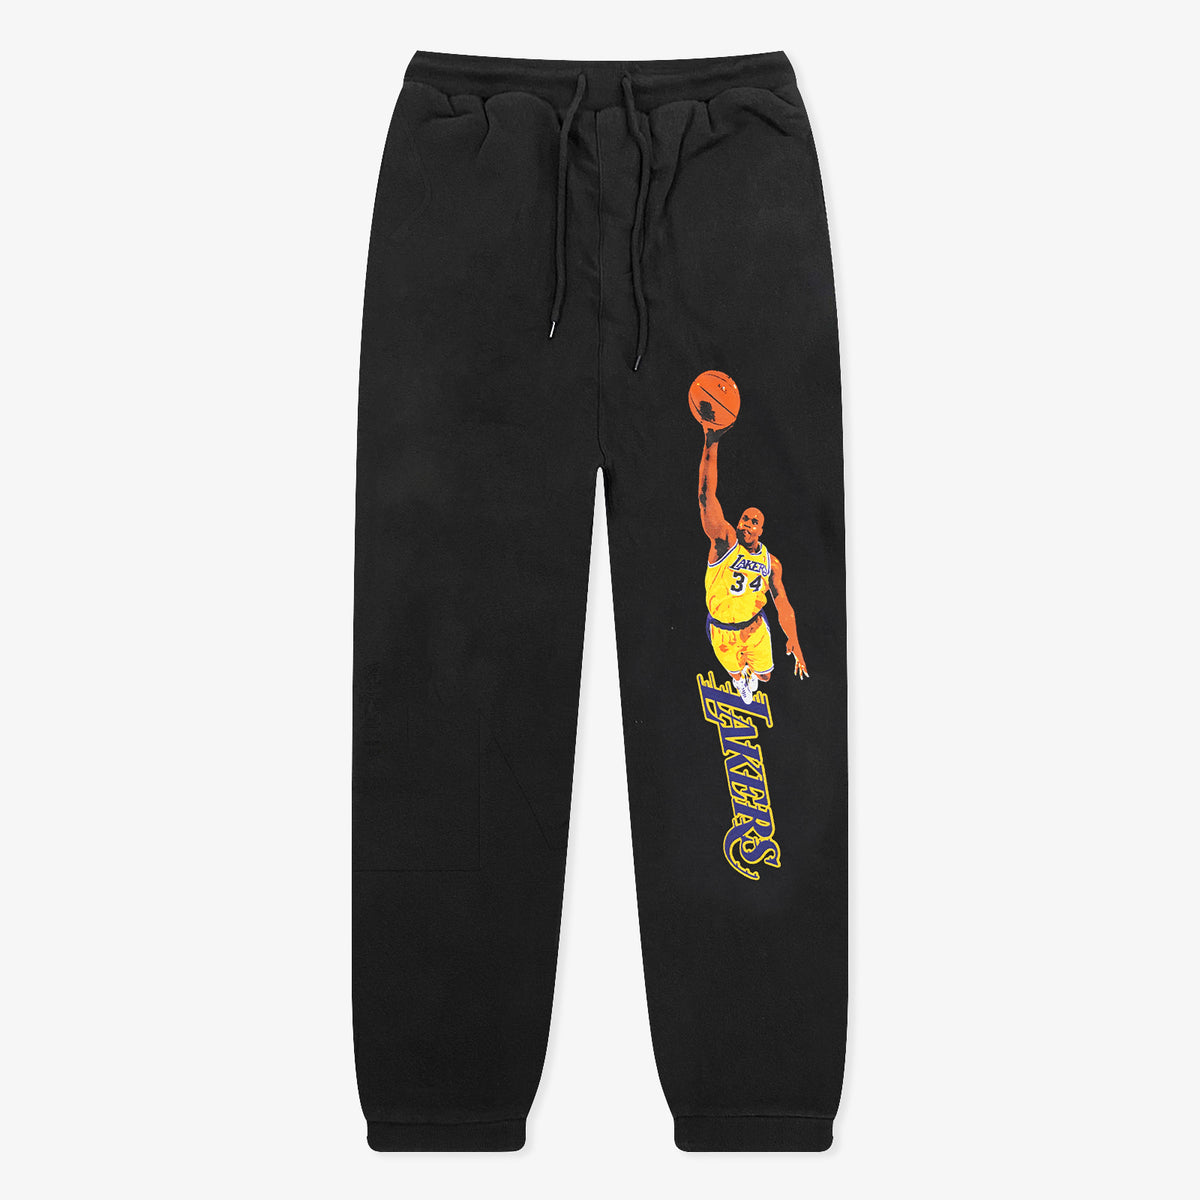 Vintage Reebok NBA Los Angeles Lakers Men's Sweatpants Size 2XL.